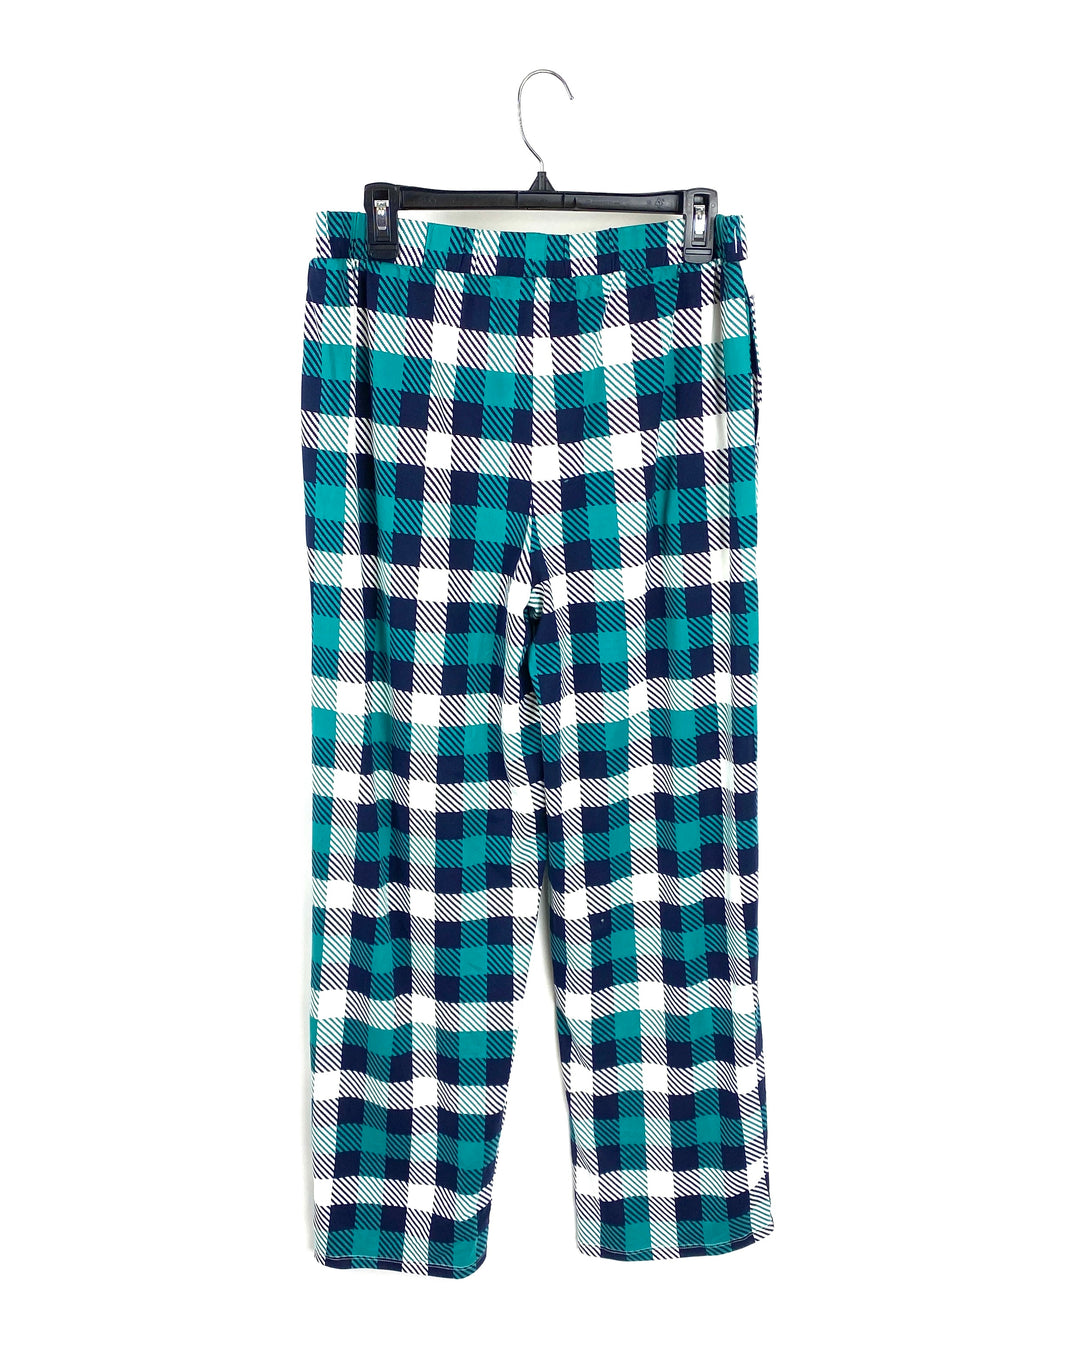 Blue and White Print Pajama Pants - Medium